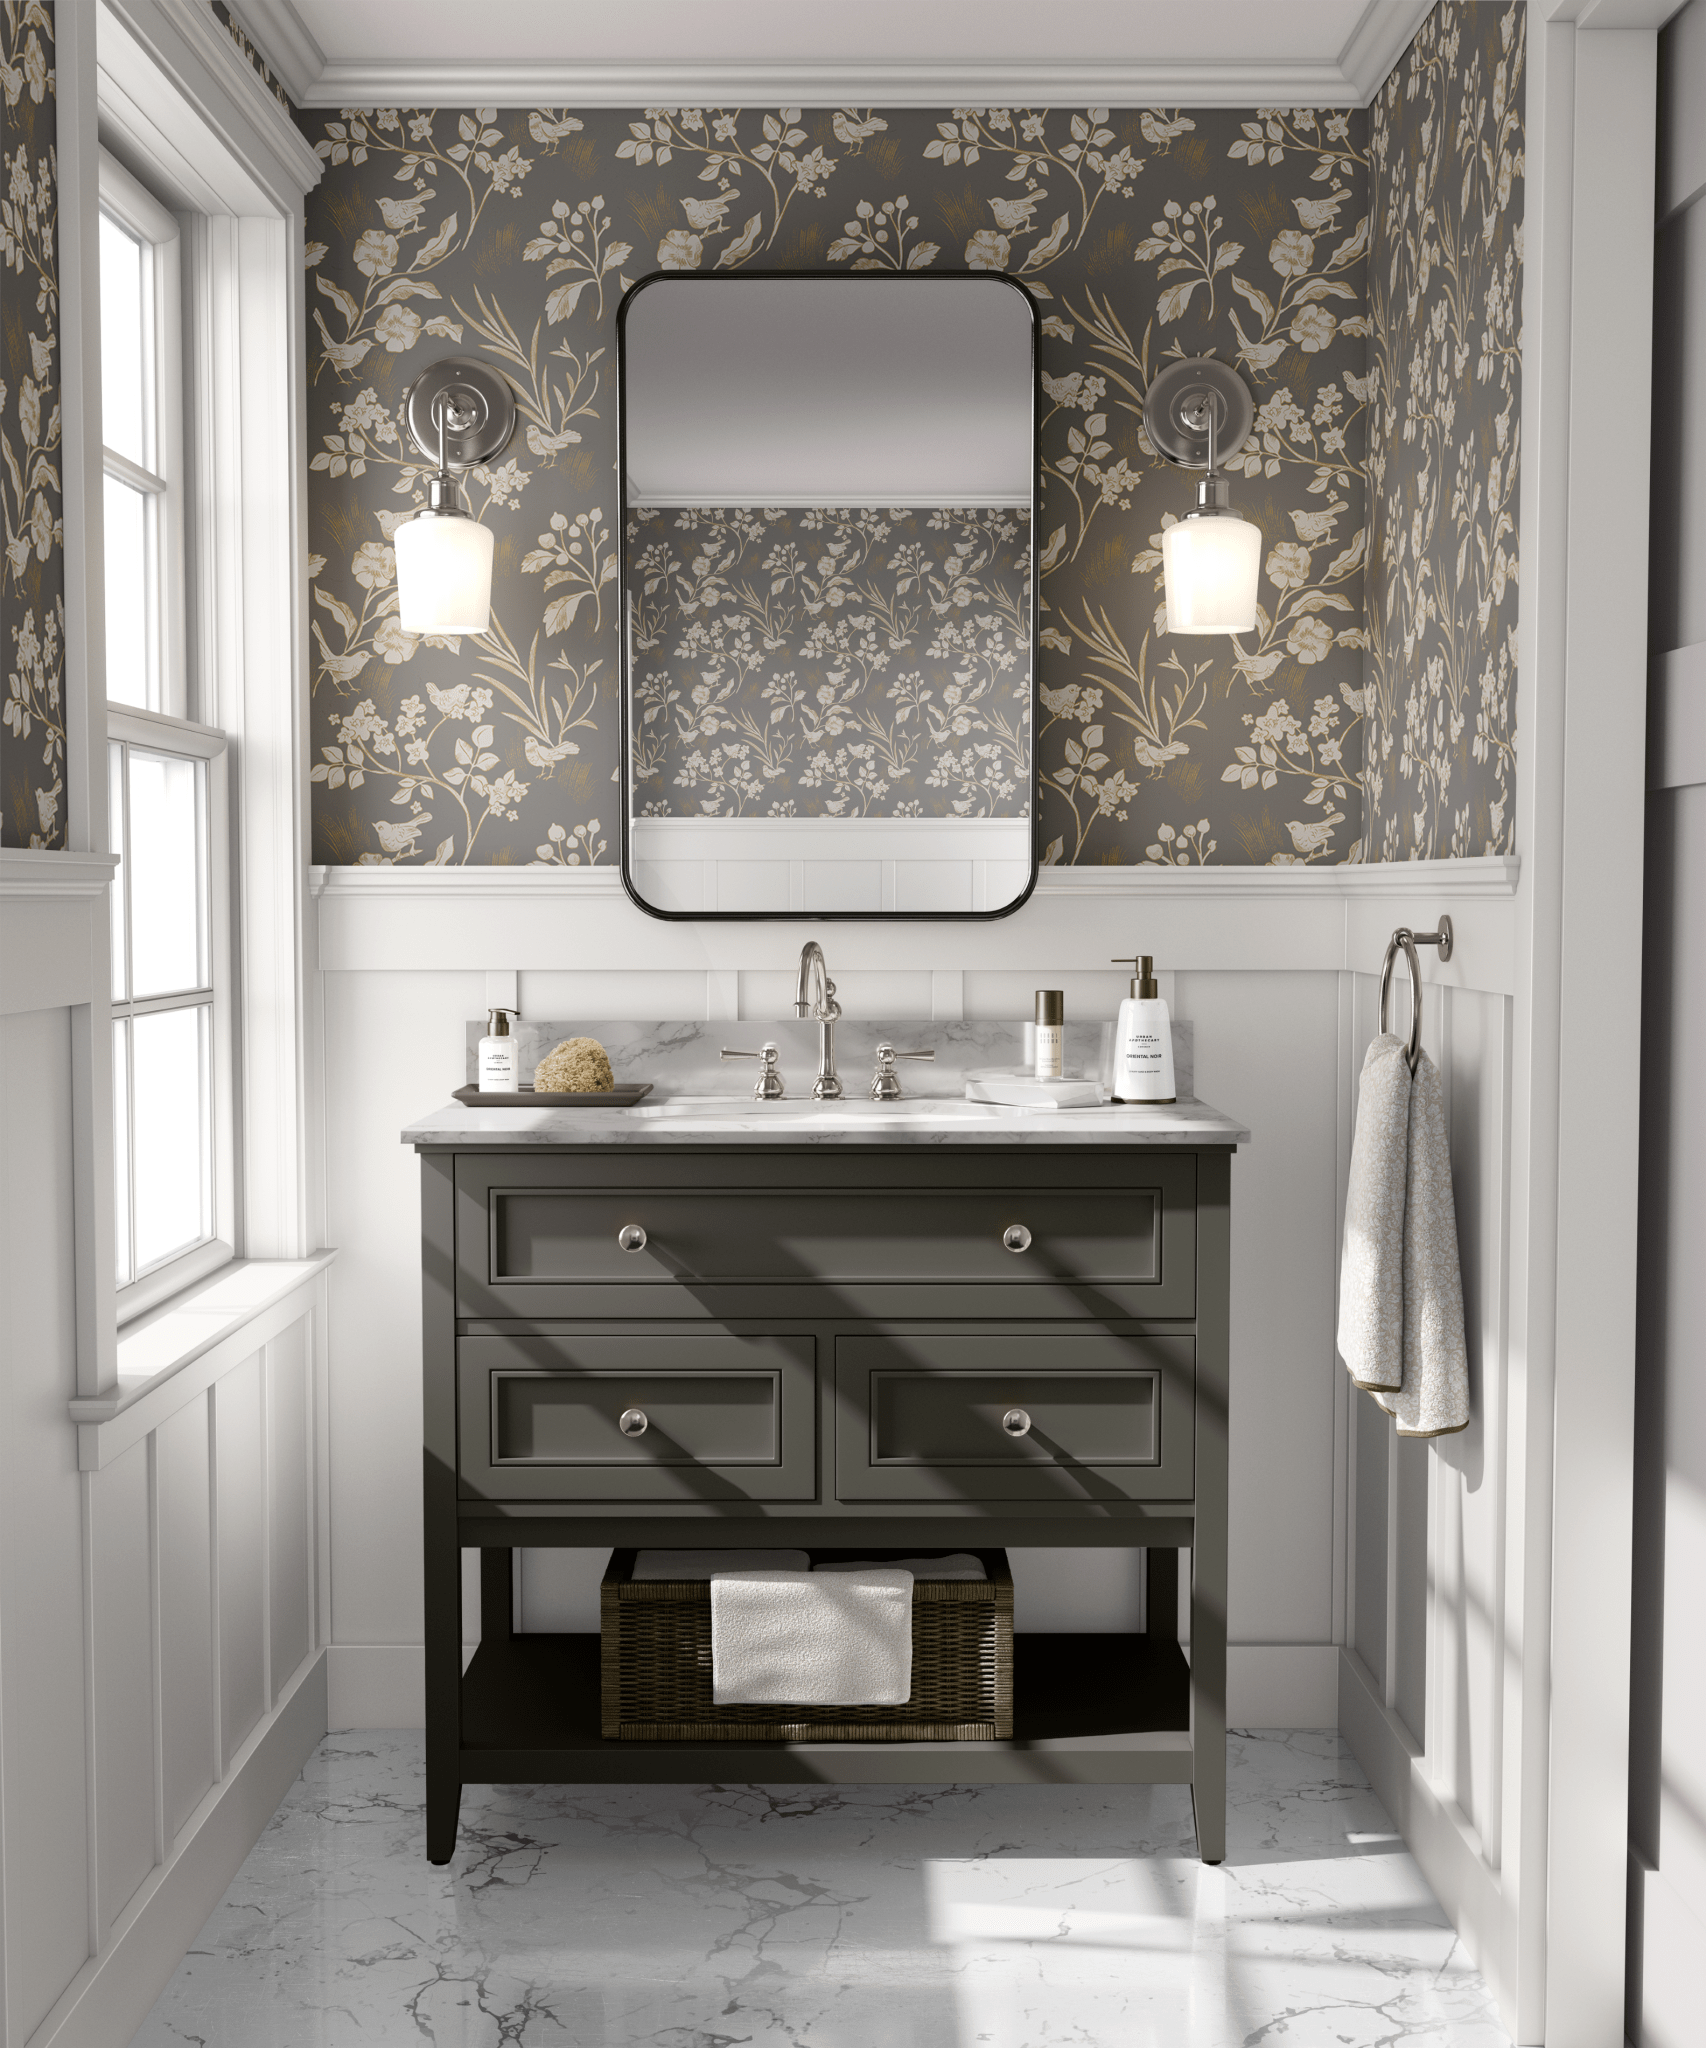 A bathroom with dark floral peel and stick wallpaper, a grey vanity. Bird wallpaper.